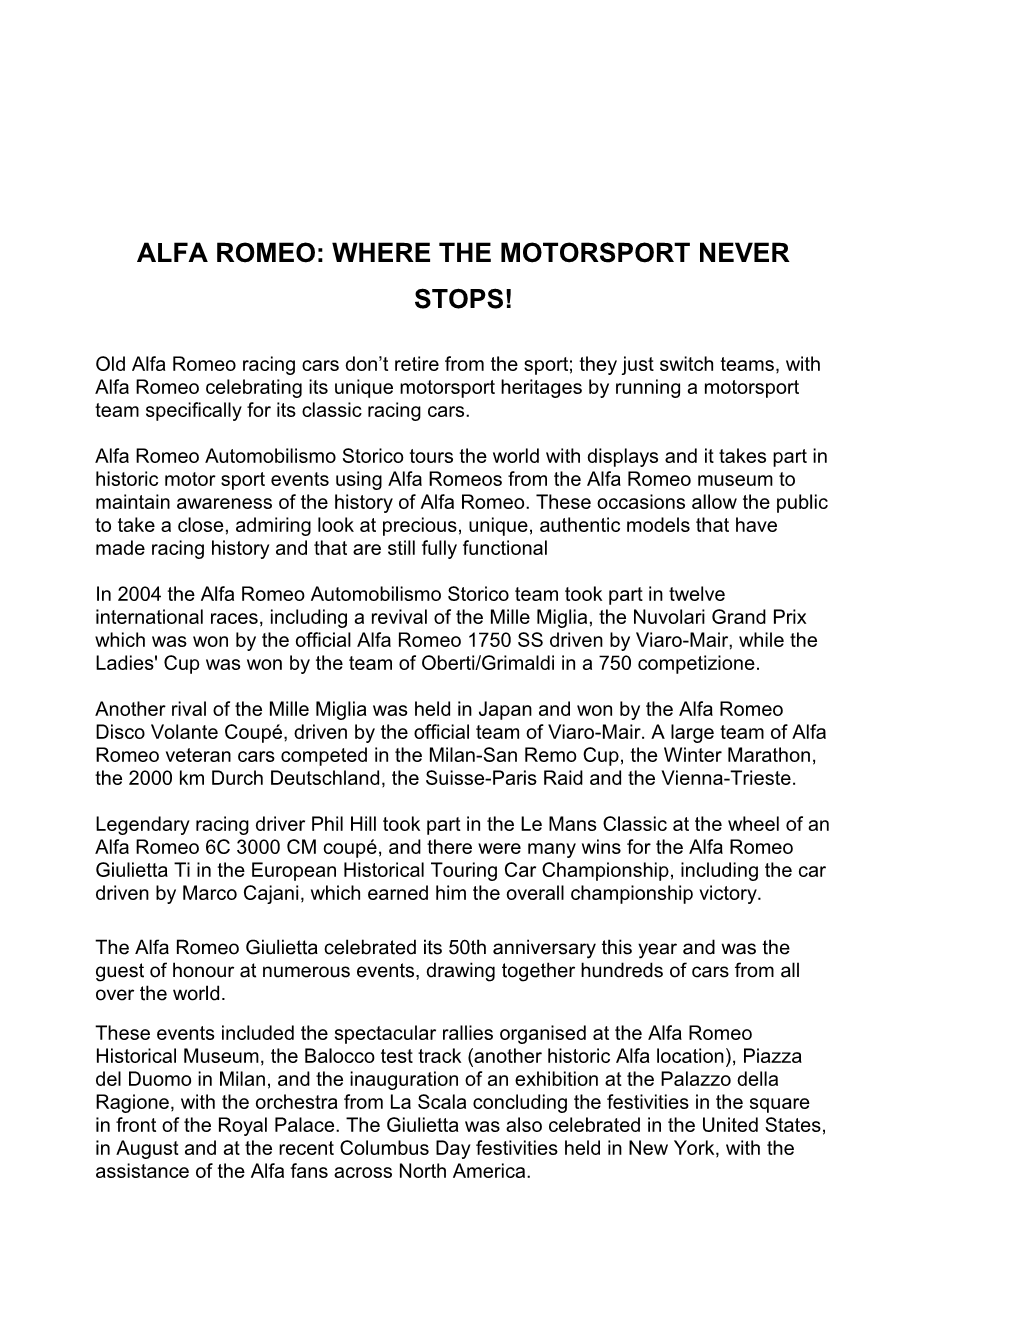 Alfa Romeo: Where the Motorsport Never Stops!